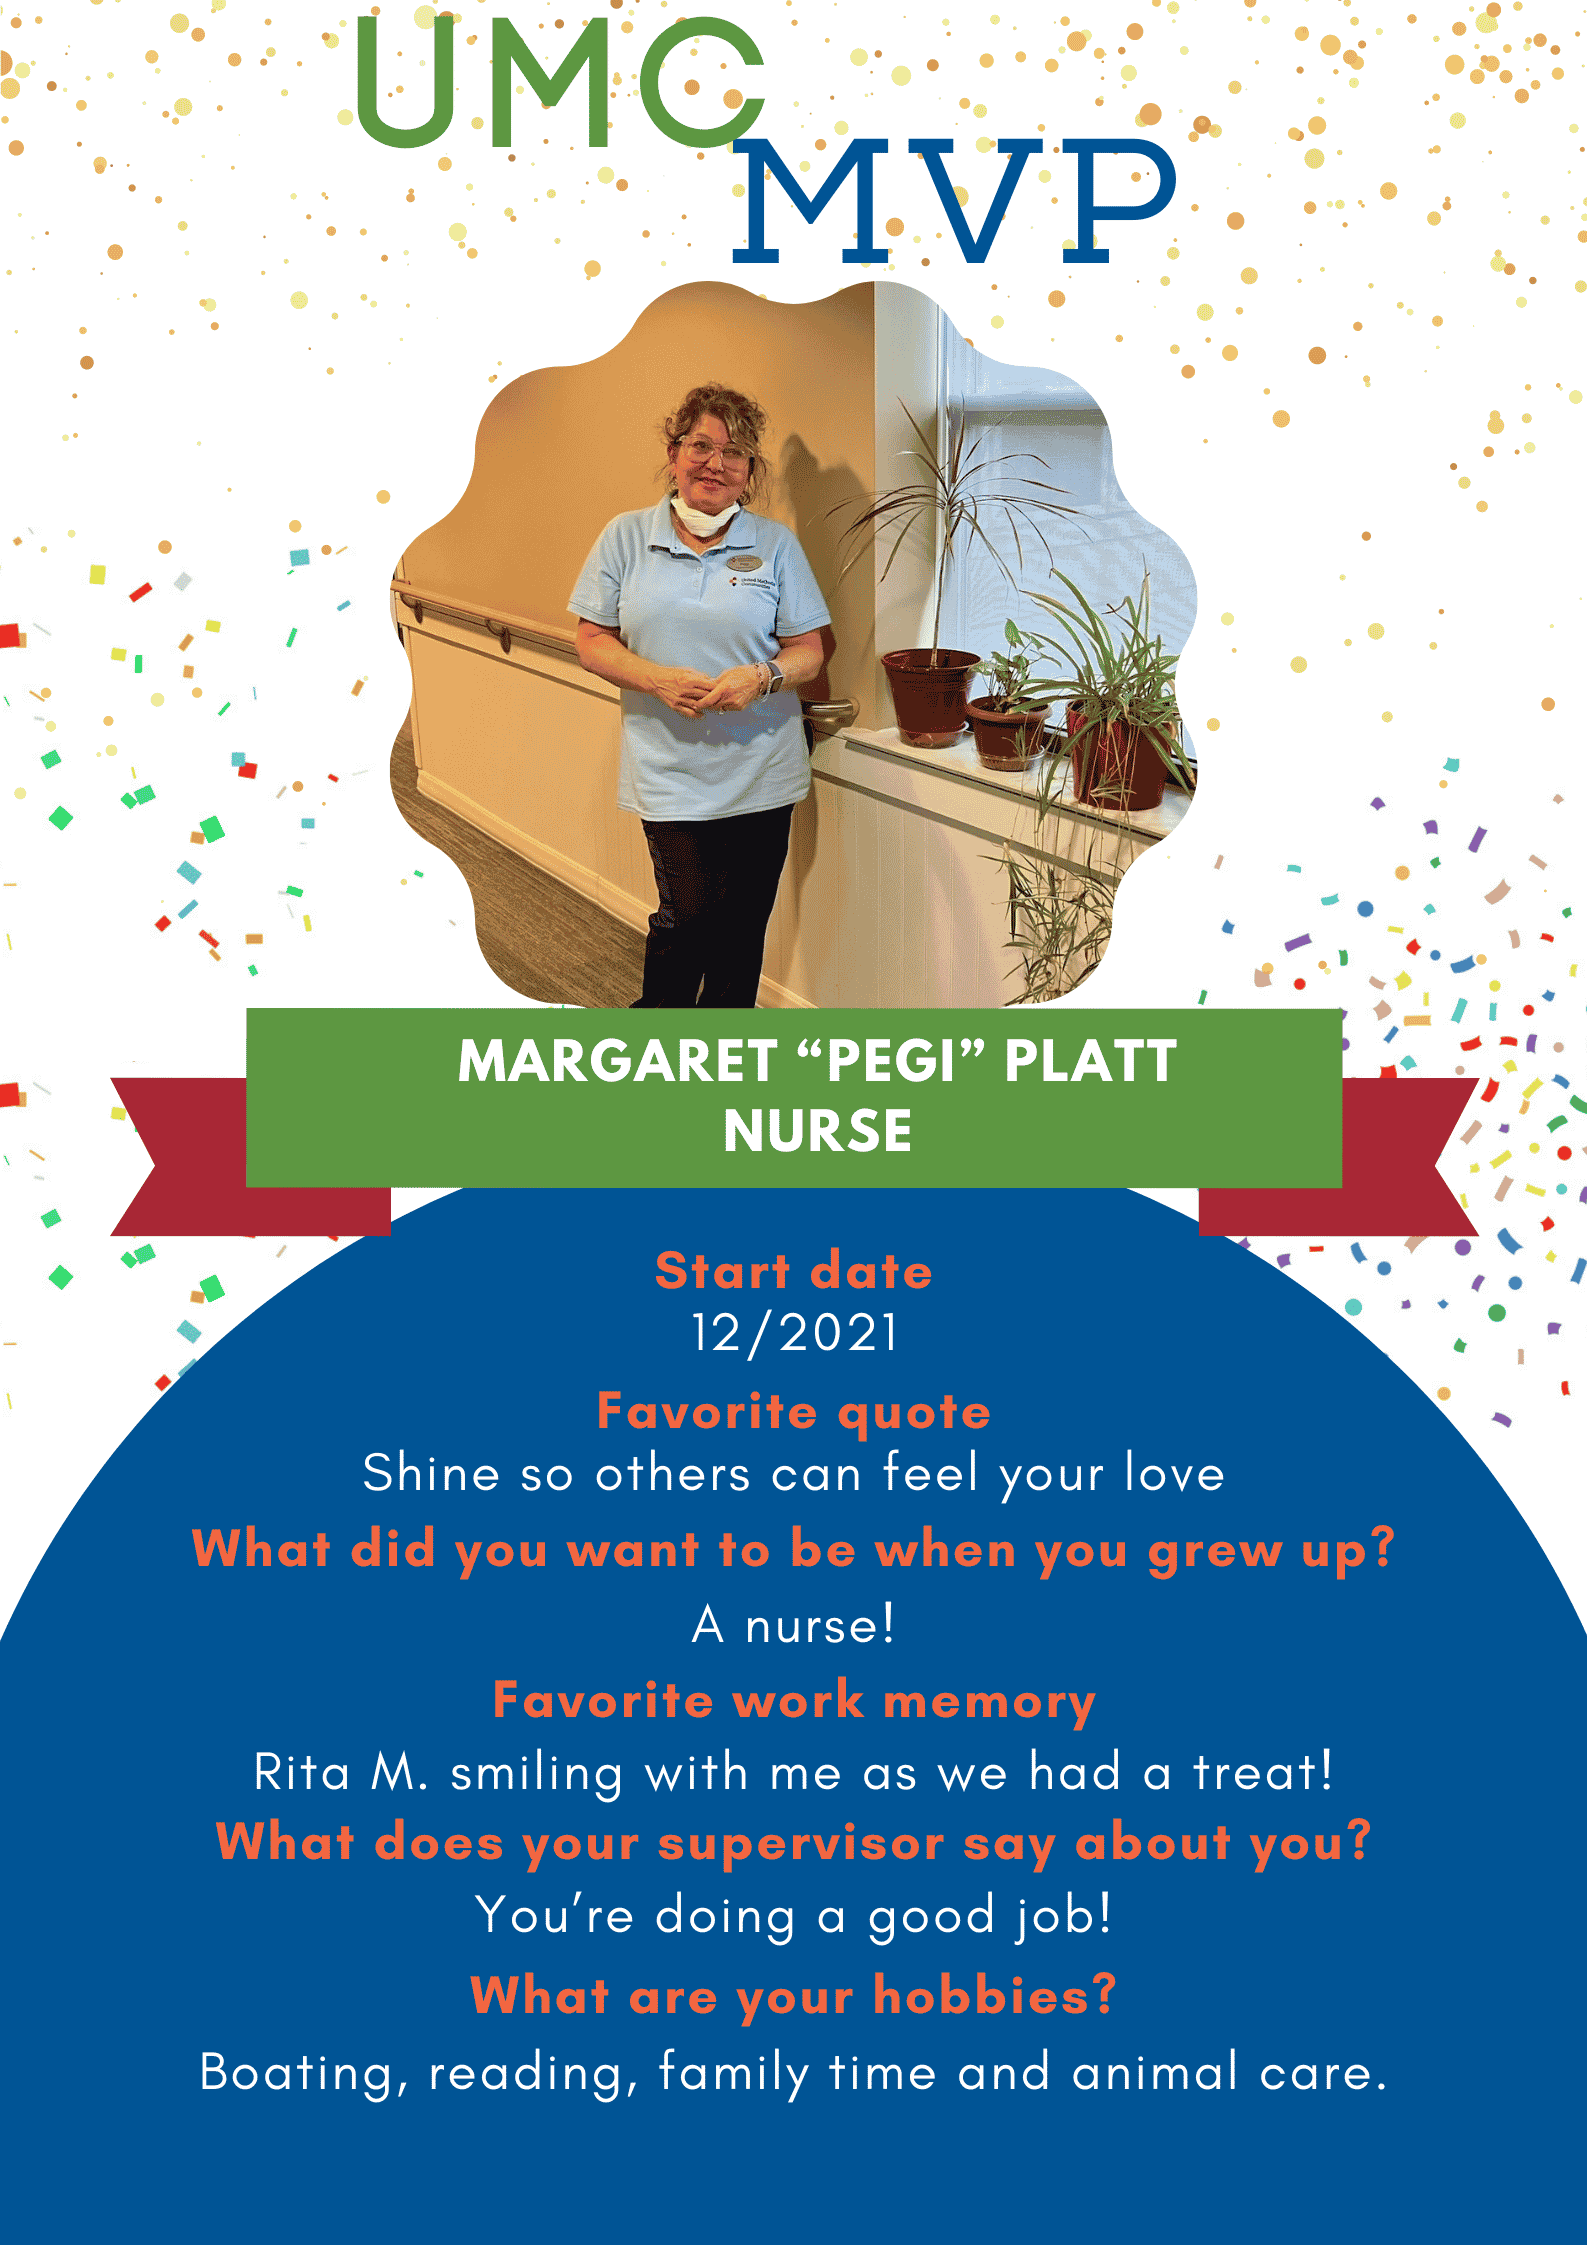 UMC MVP Margaret “Pegi” Platt